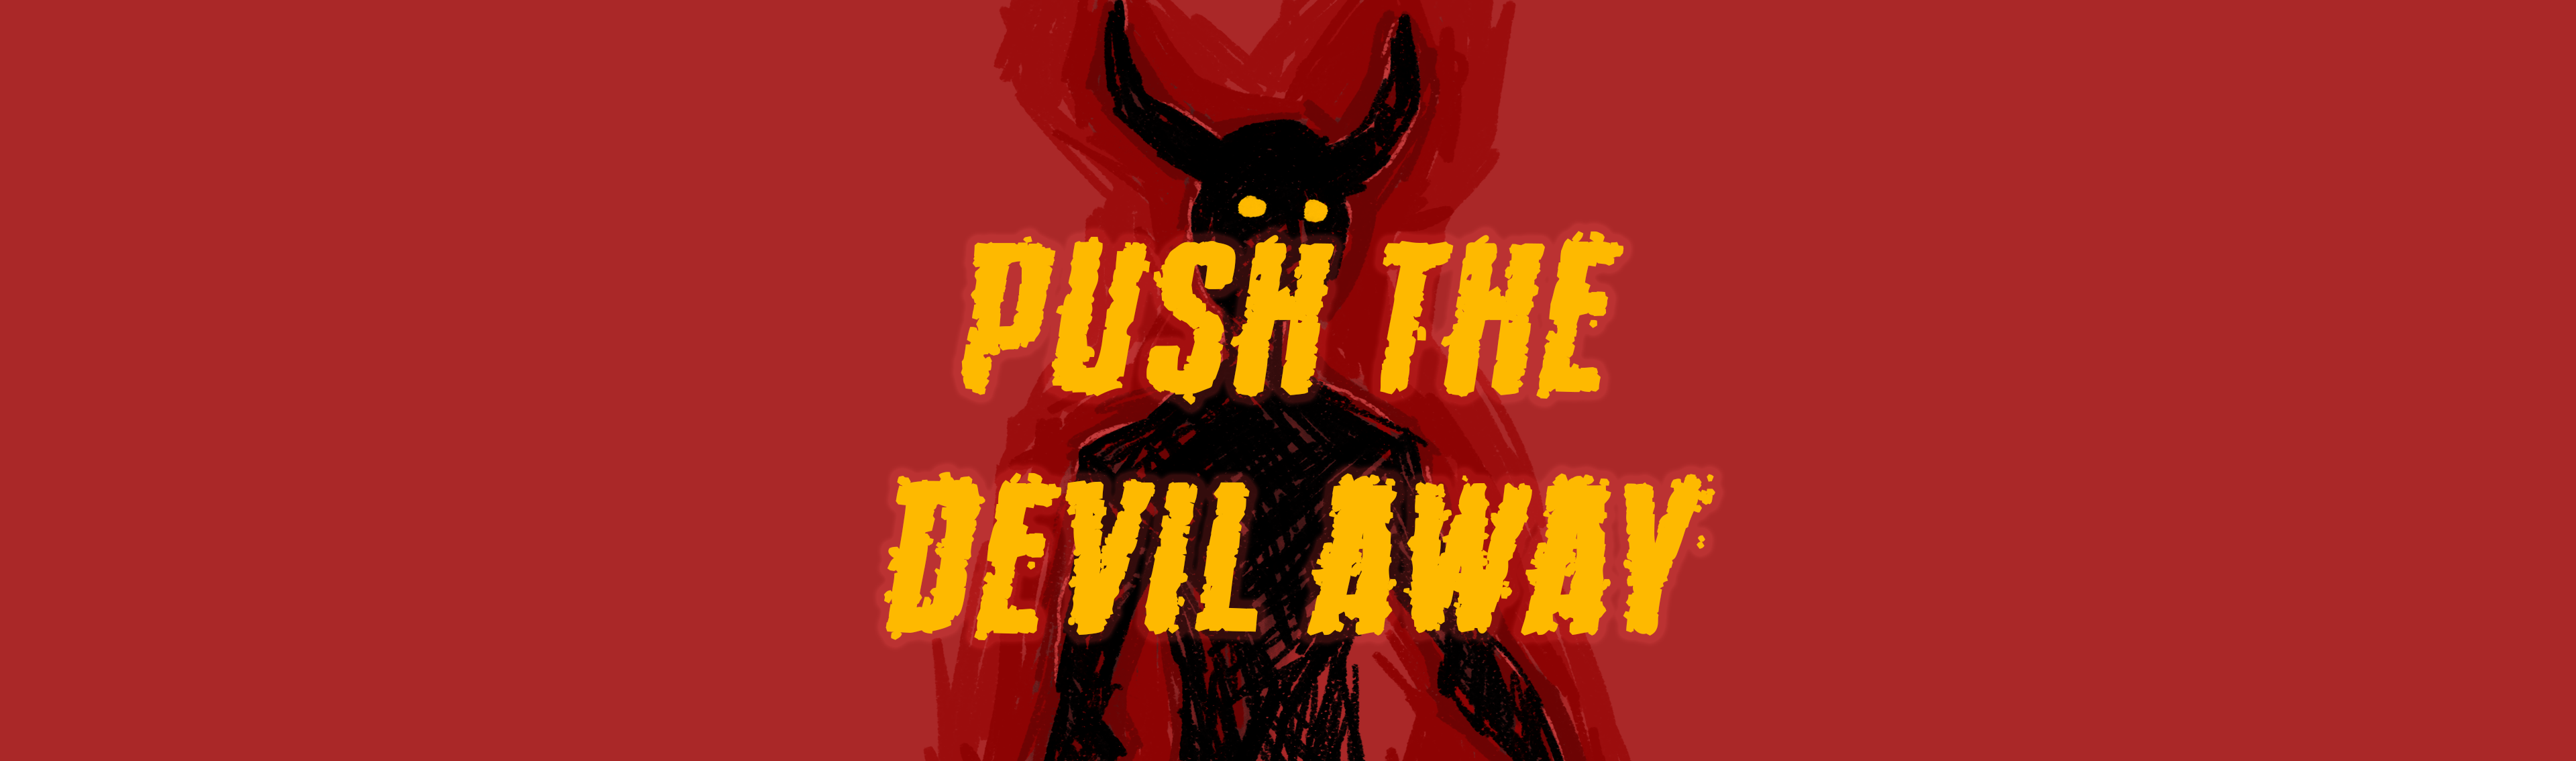 Push the Devil Away